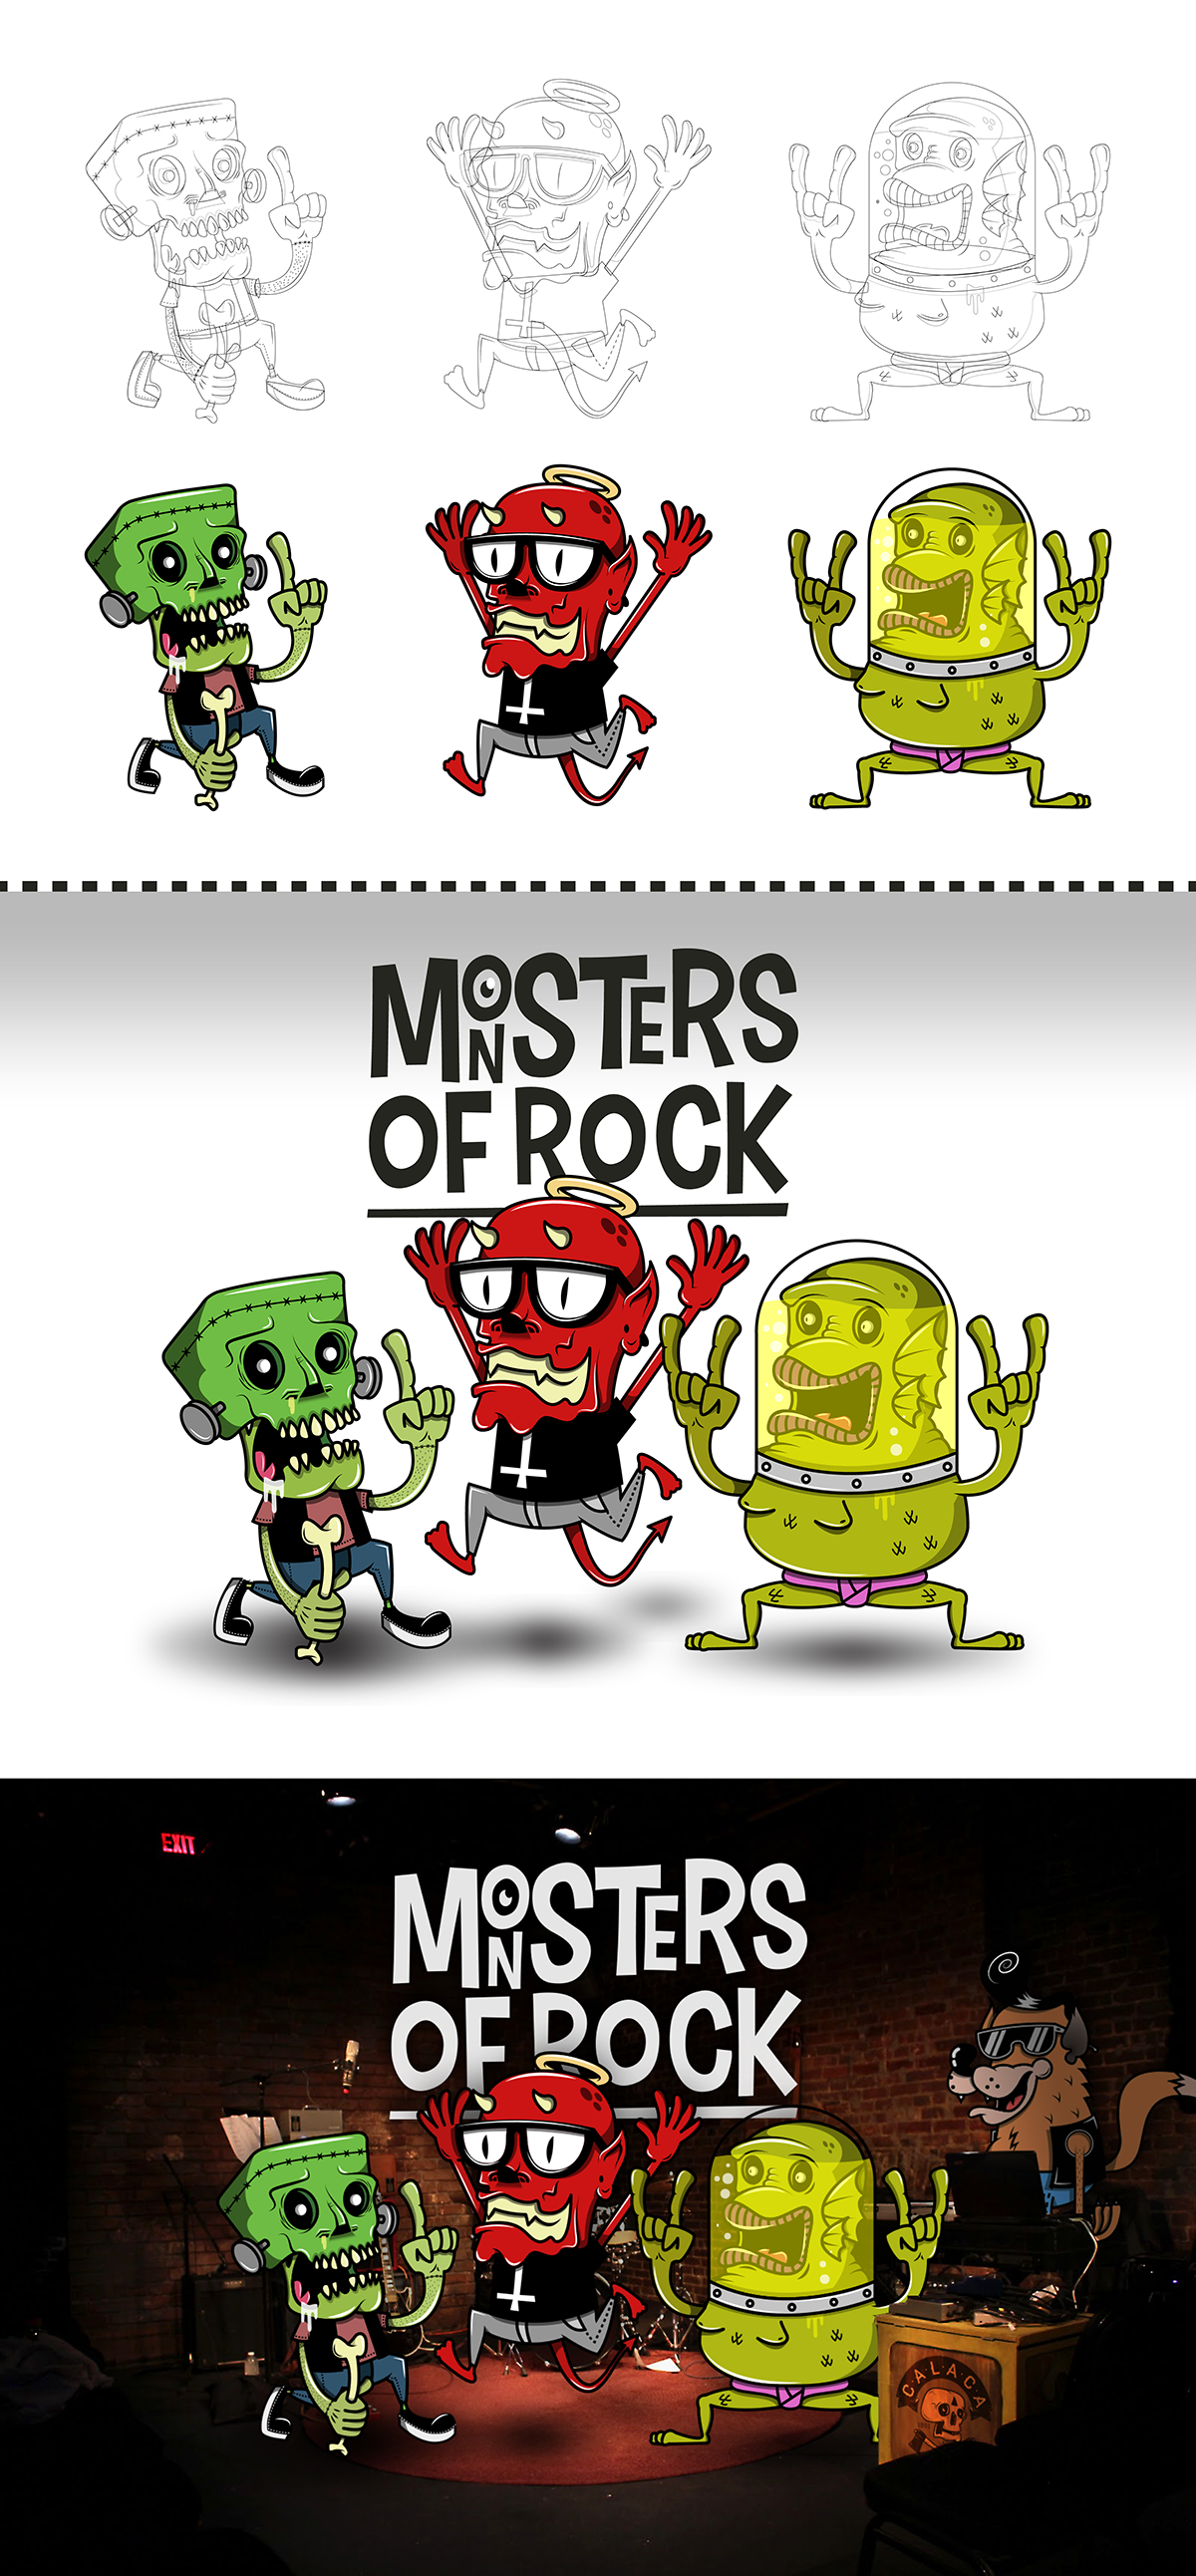 monters rock calaca c4laca devil frankenstein Monstruos adobe Illustrator photoshop quito Ecuador UiO